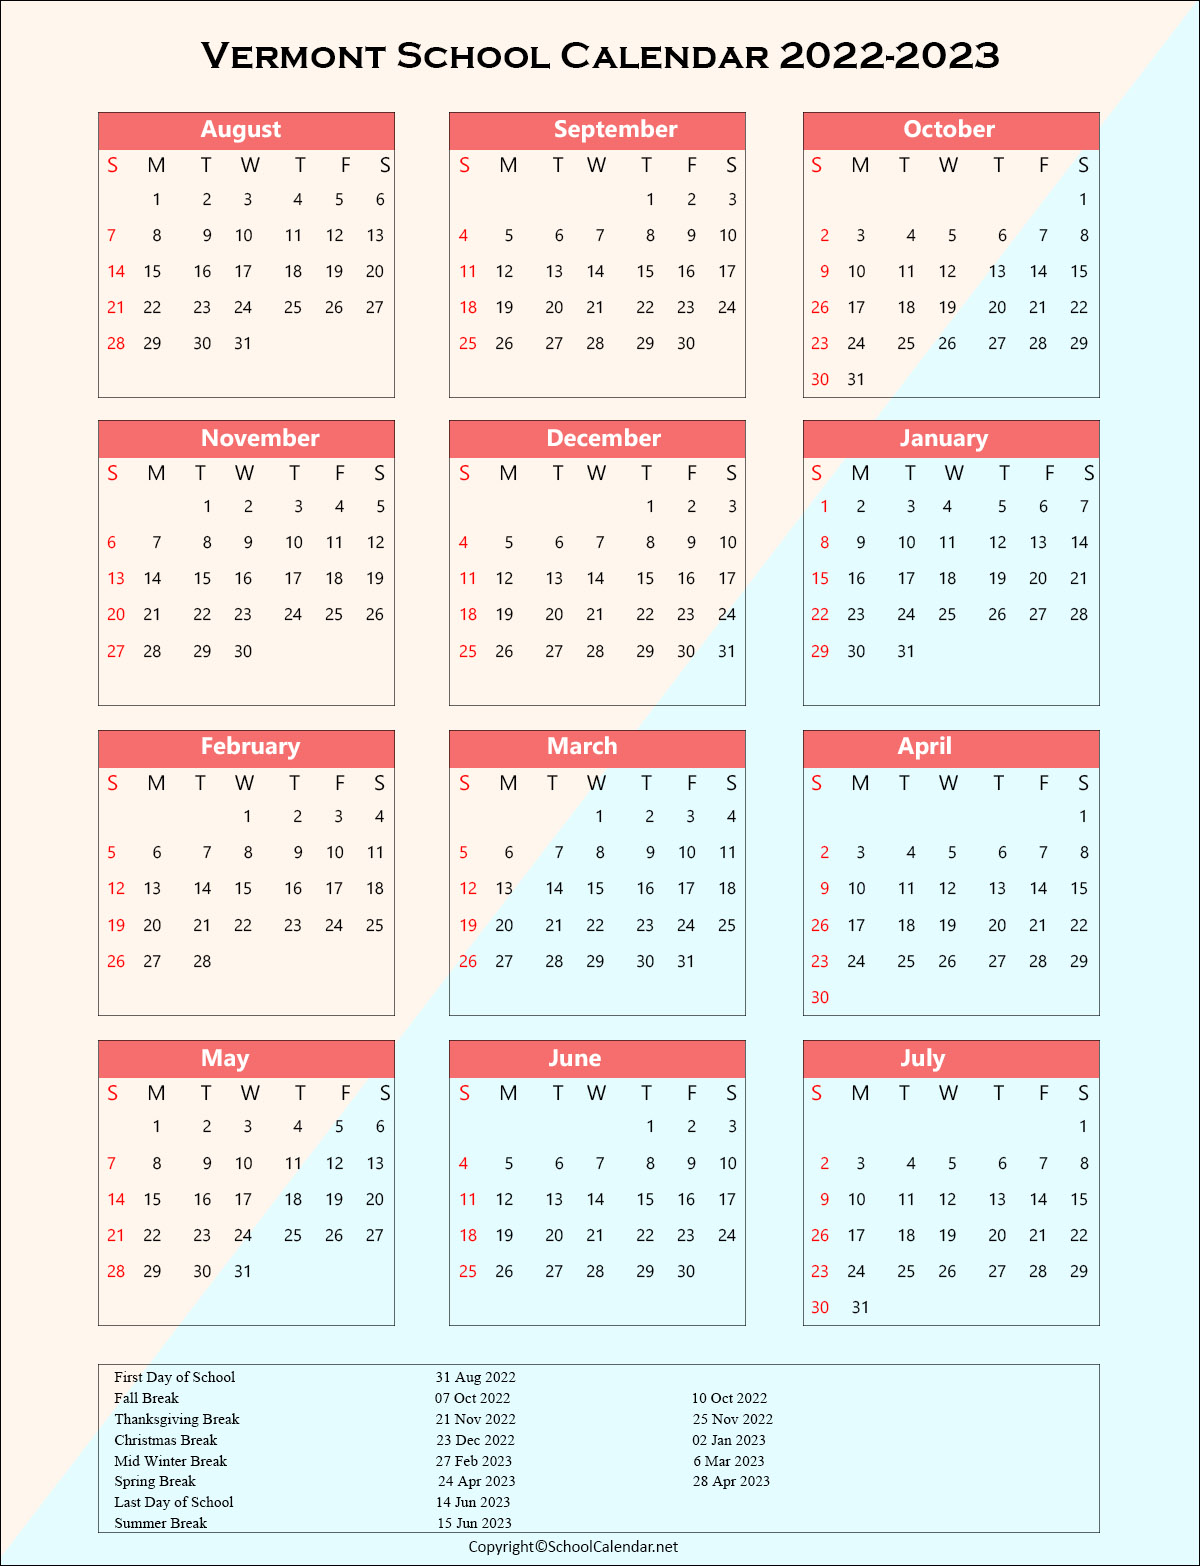 Vermont School Holiday Calendar 2022